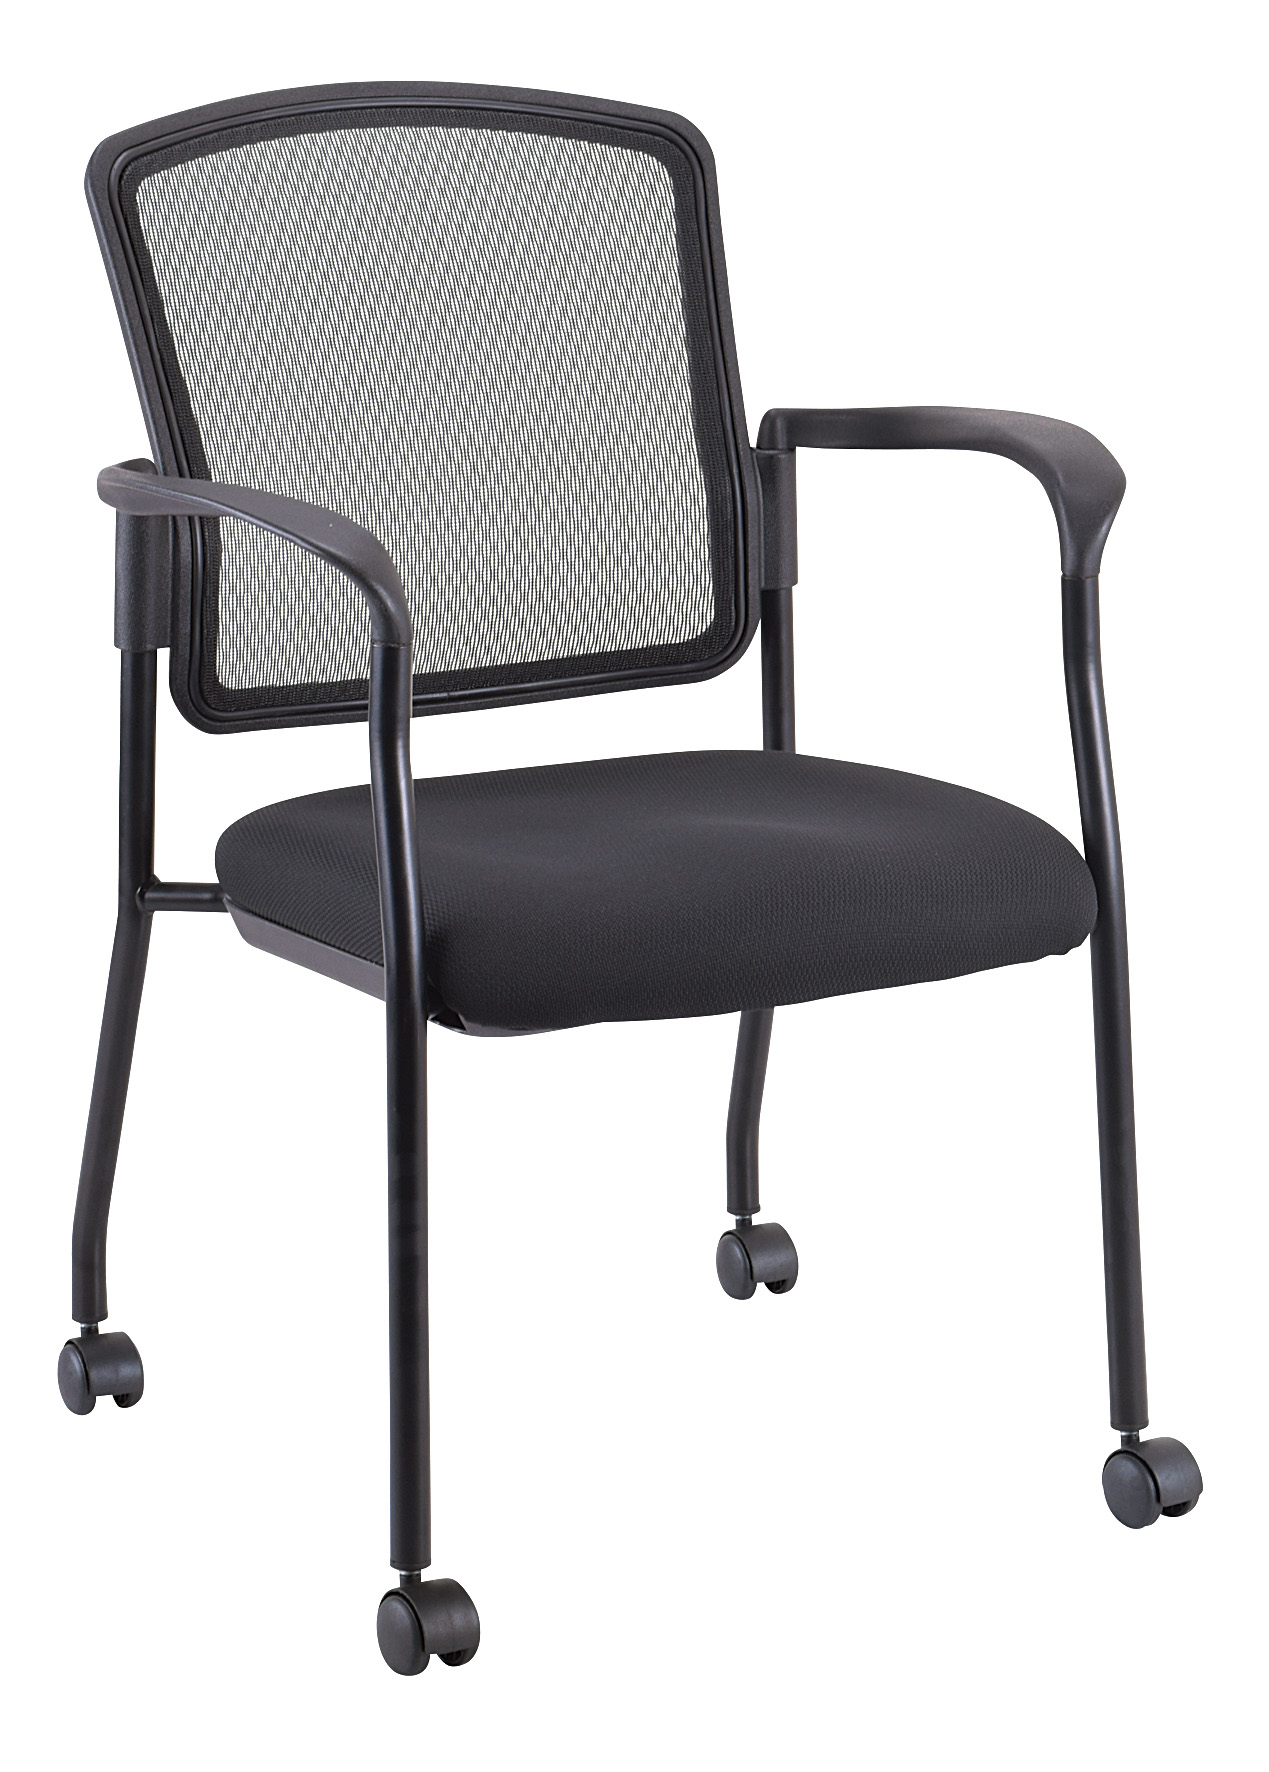 25.5" x 23.5" x 35.5" Black Mesh Fabric Guest Chair